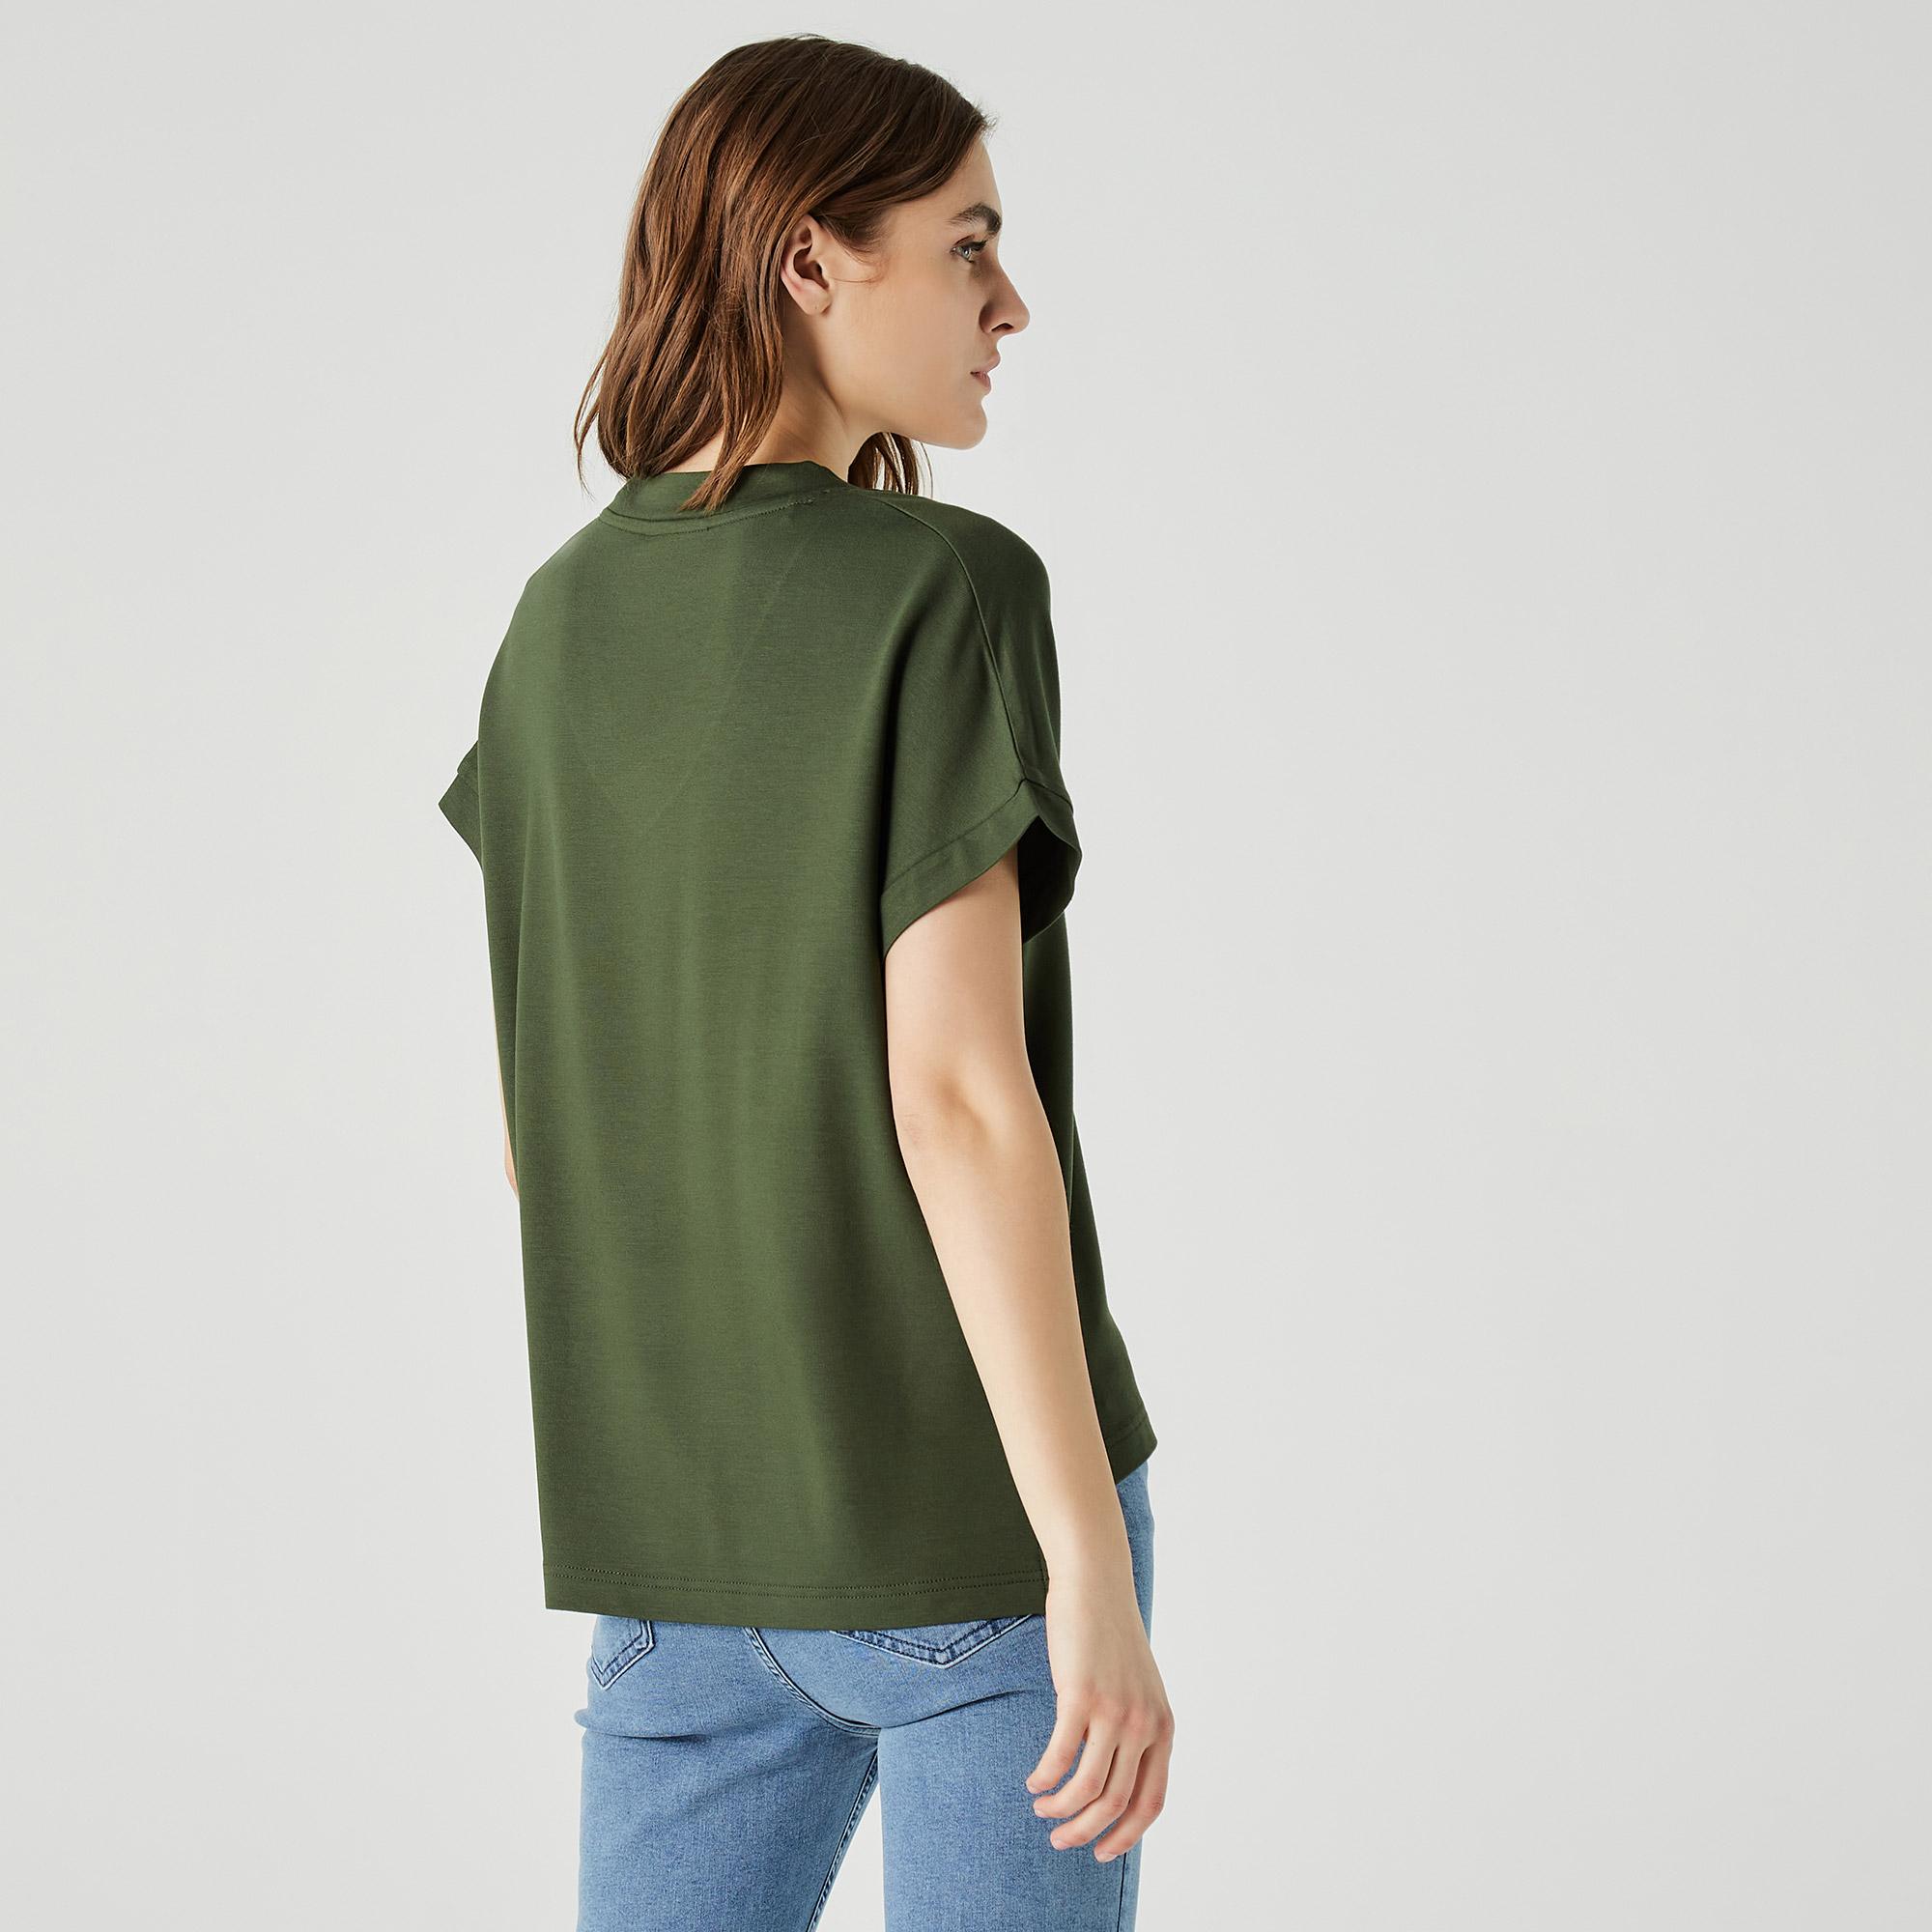 Lacoste Kadın Relaxed Fit V Yaka Koyu Yeşil T-Shirt. 3